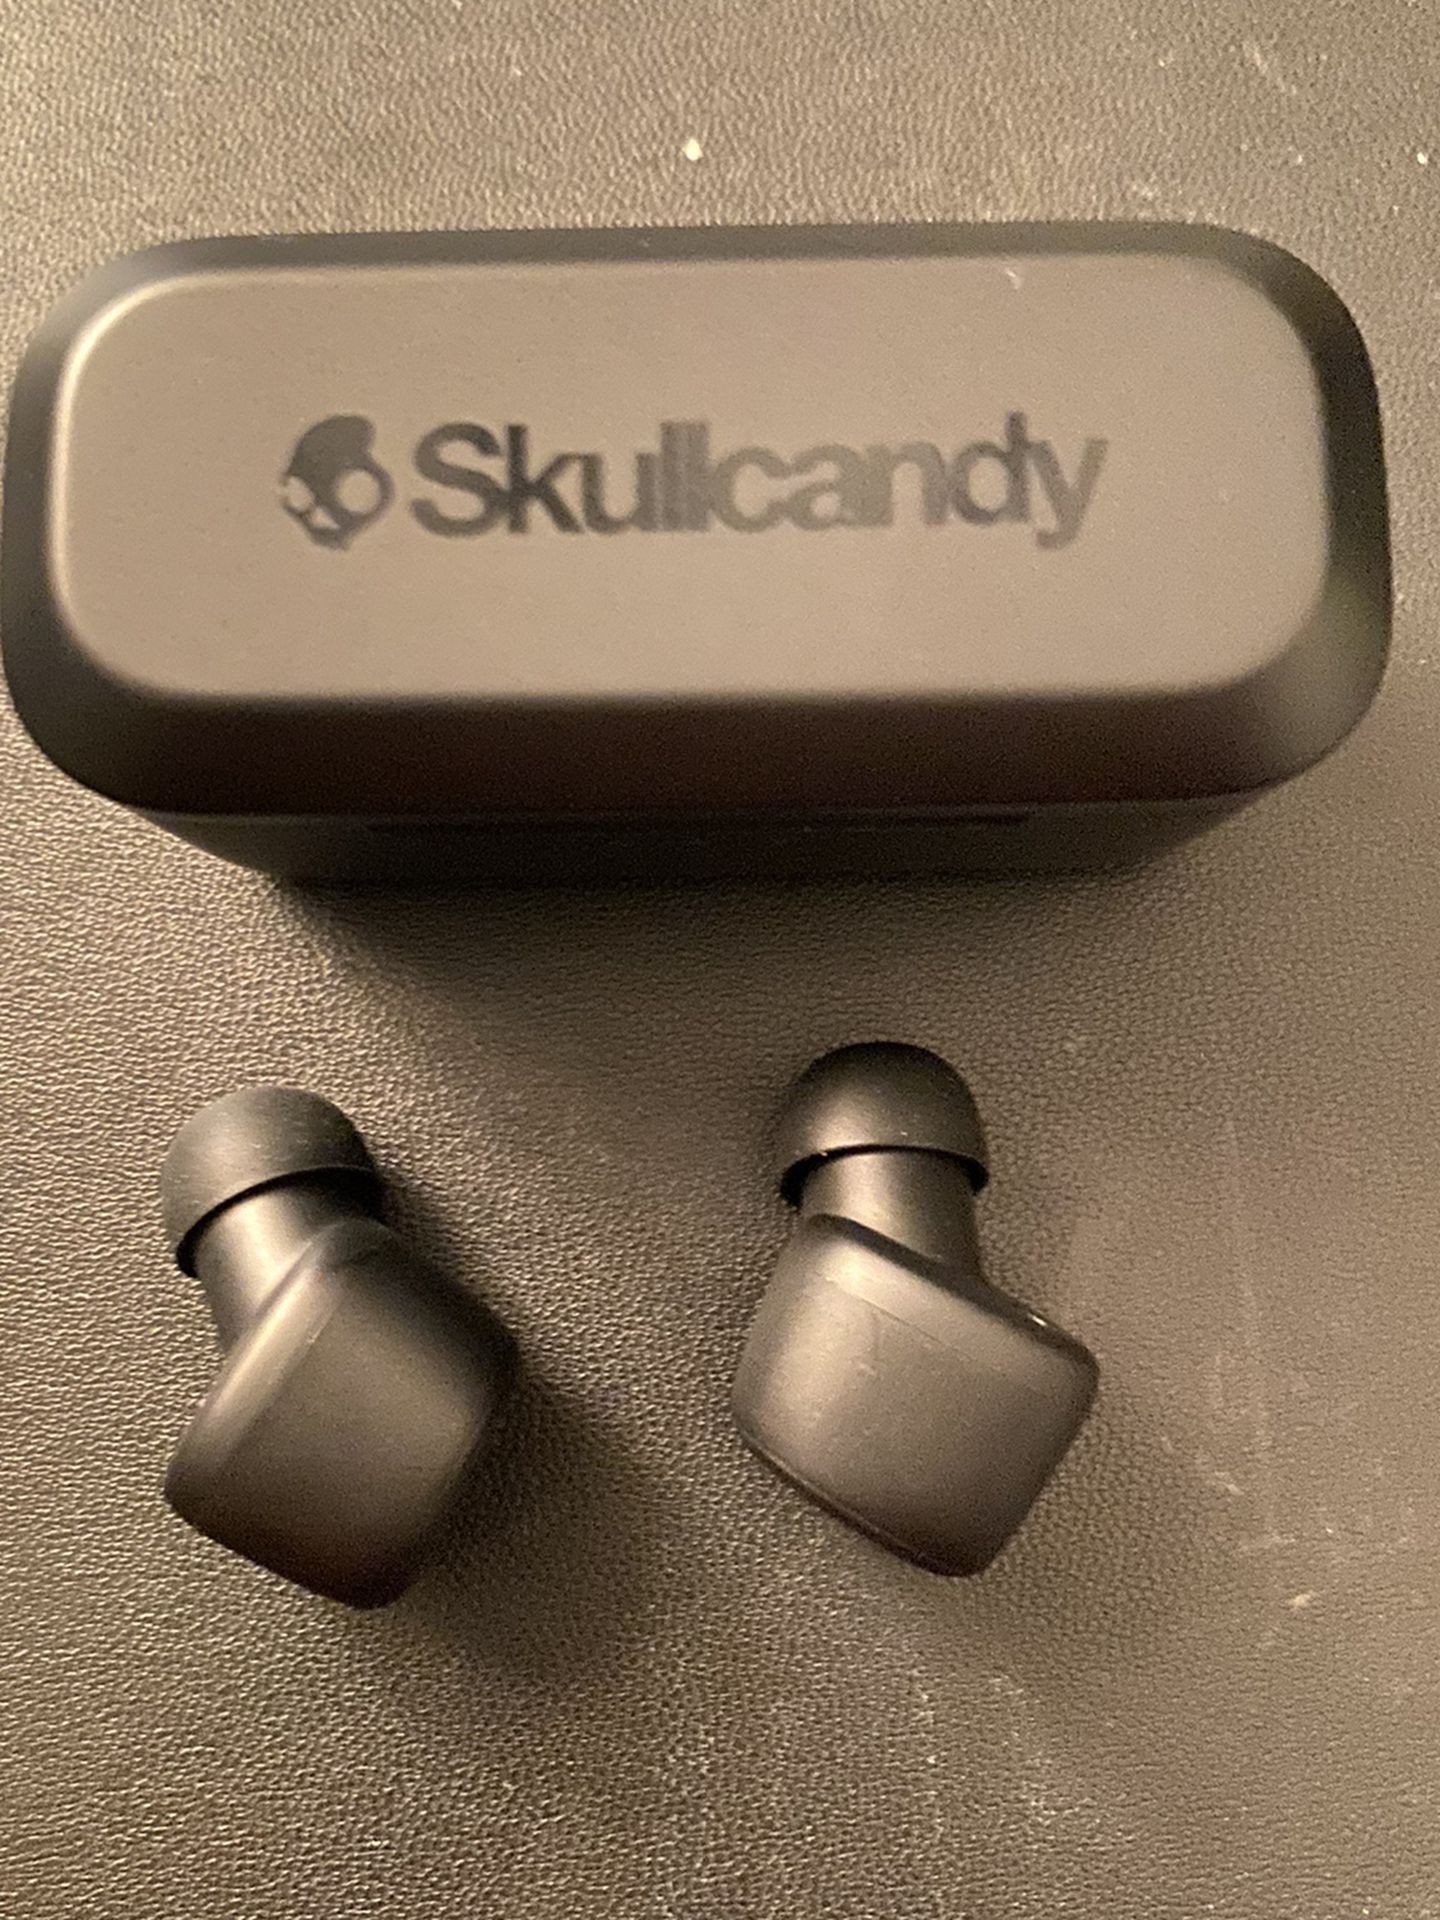 Skull Candy Wireless Earbuds